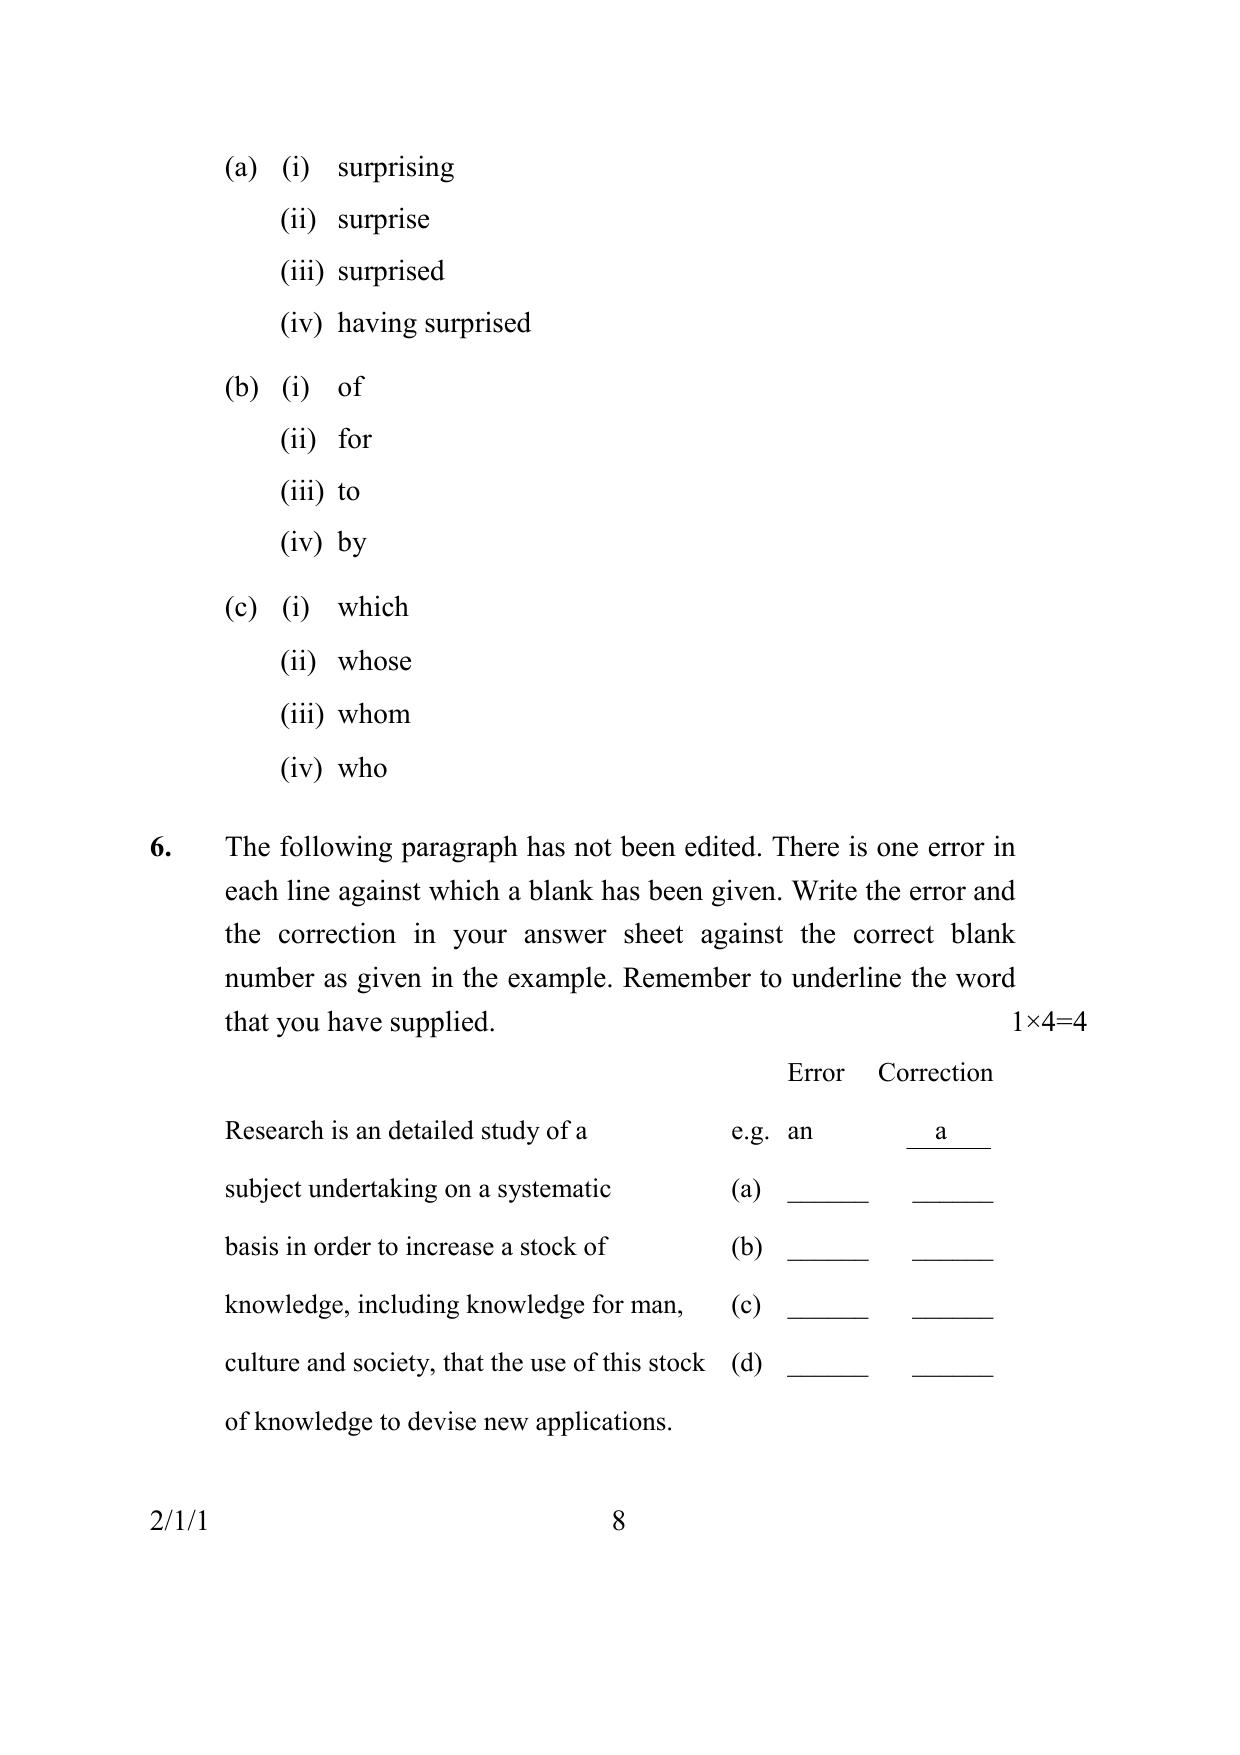 CBSE Class 10 2-1-1 ENGLISH LANGUAGE & LIT. 2016 Question Paper - Page 8